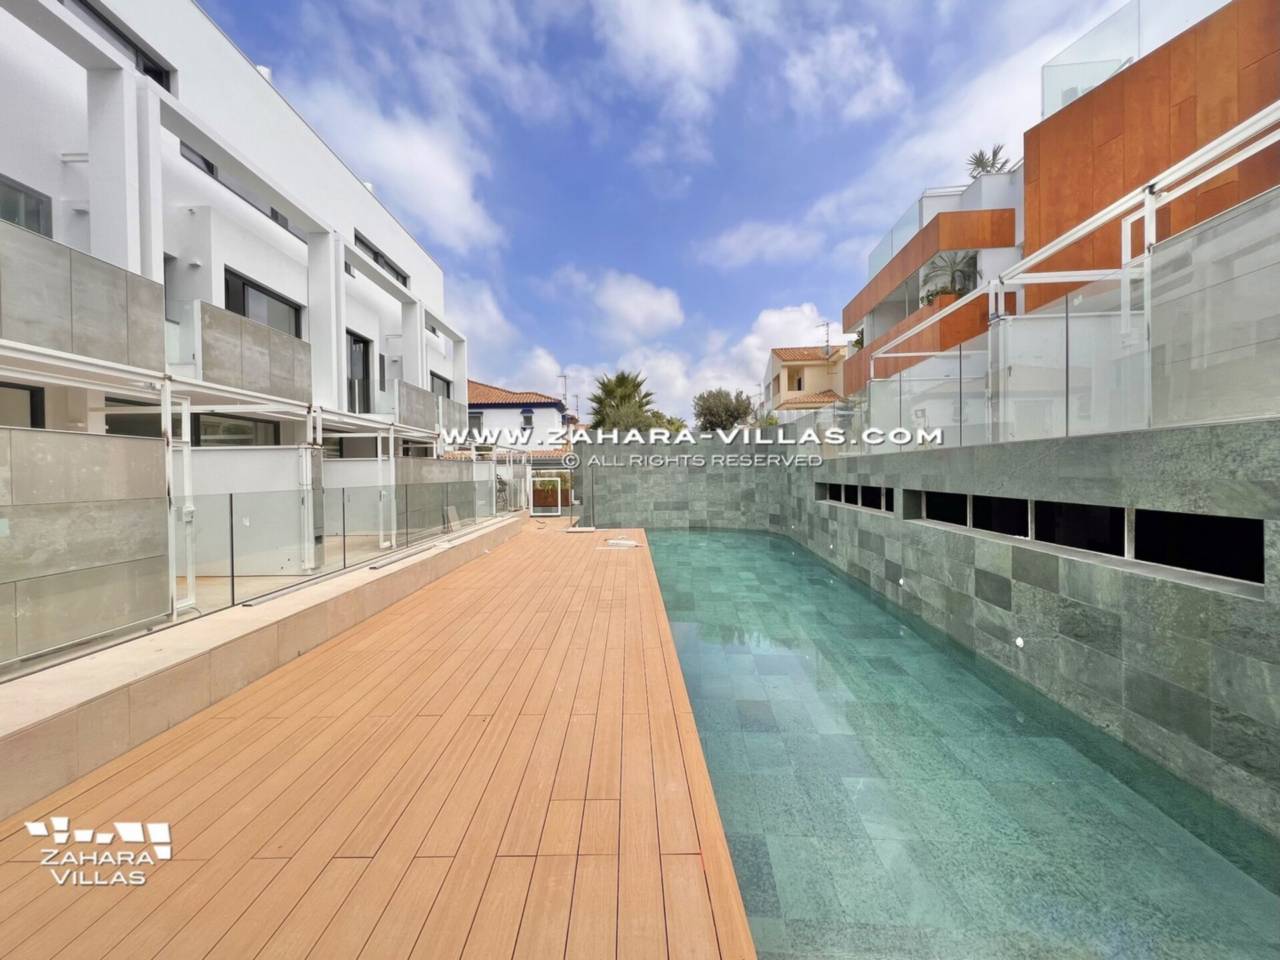 Imagen 2 de New development completed "EL OASIS DE ZAHARA" semi-detached houses by the sea